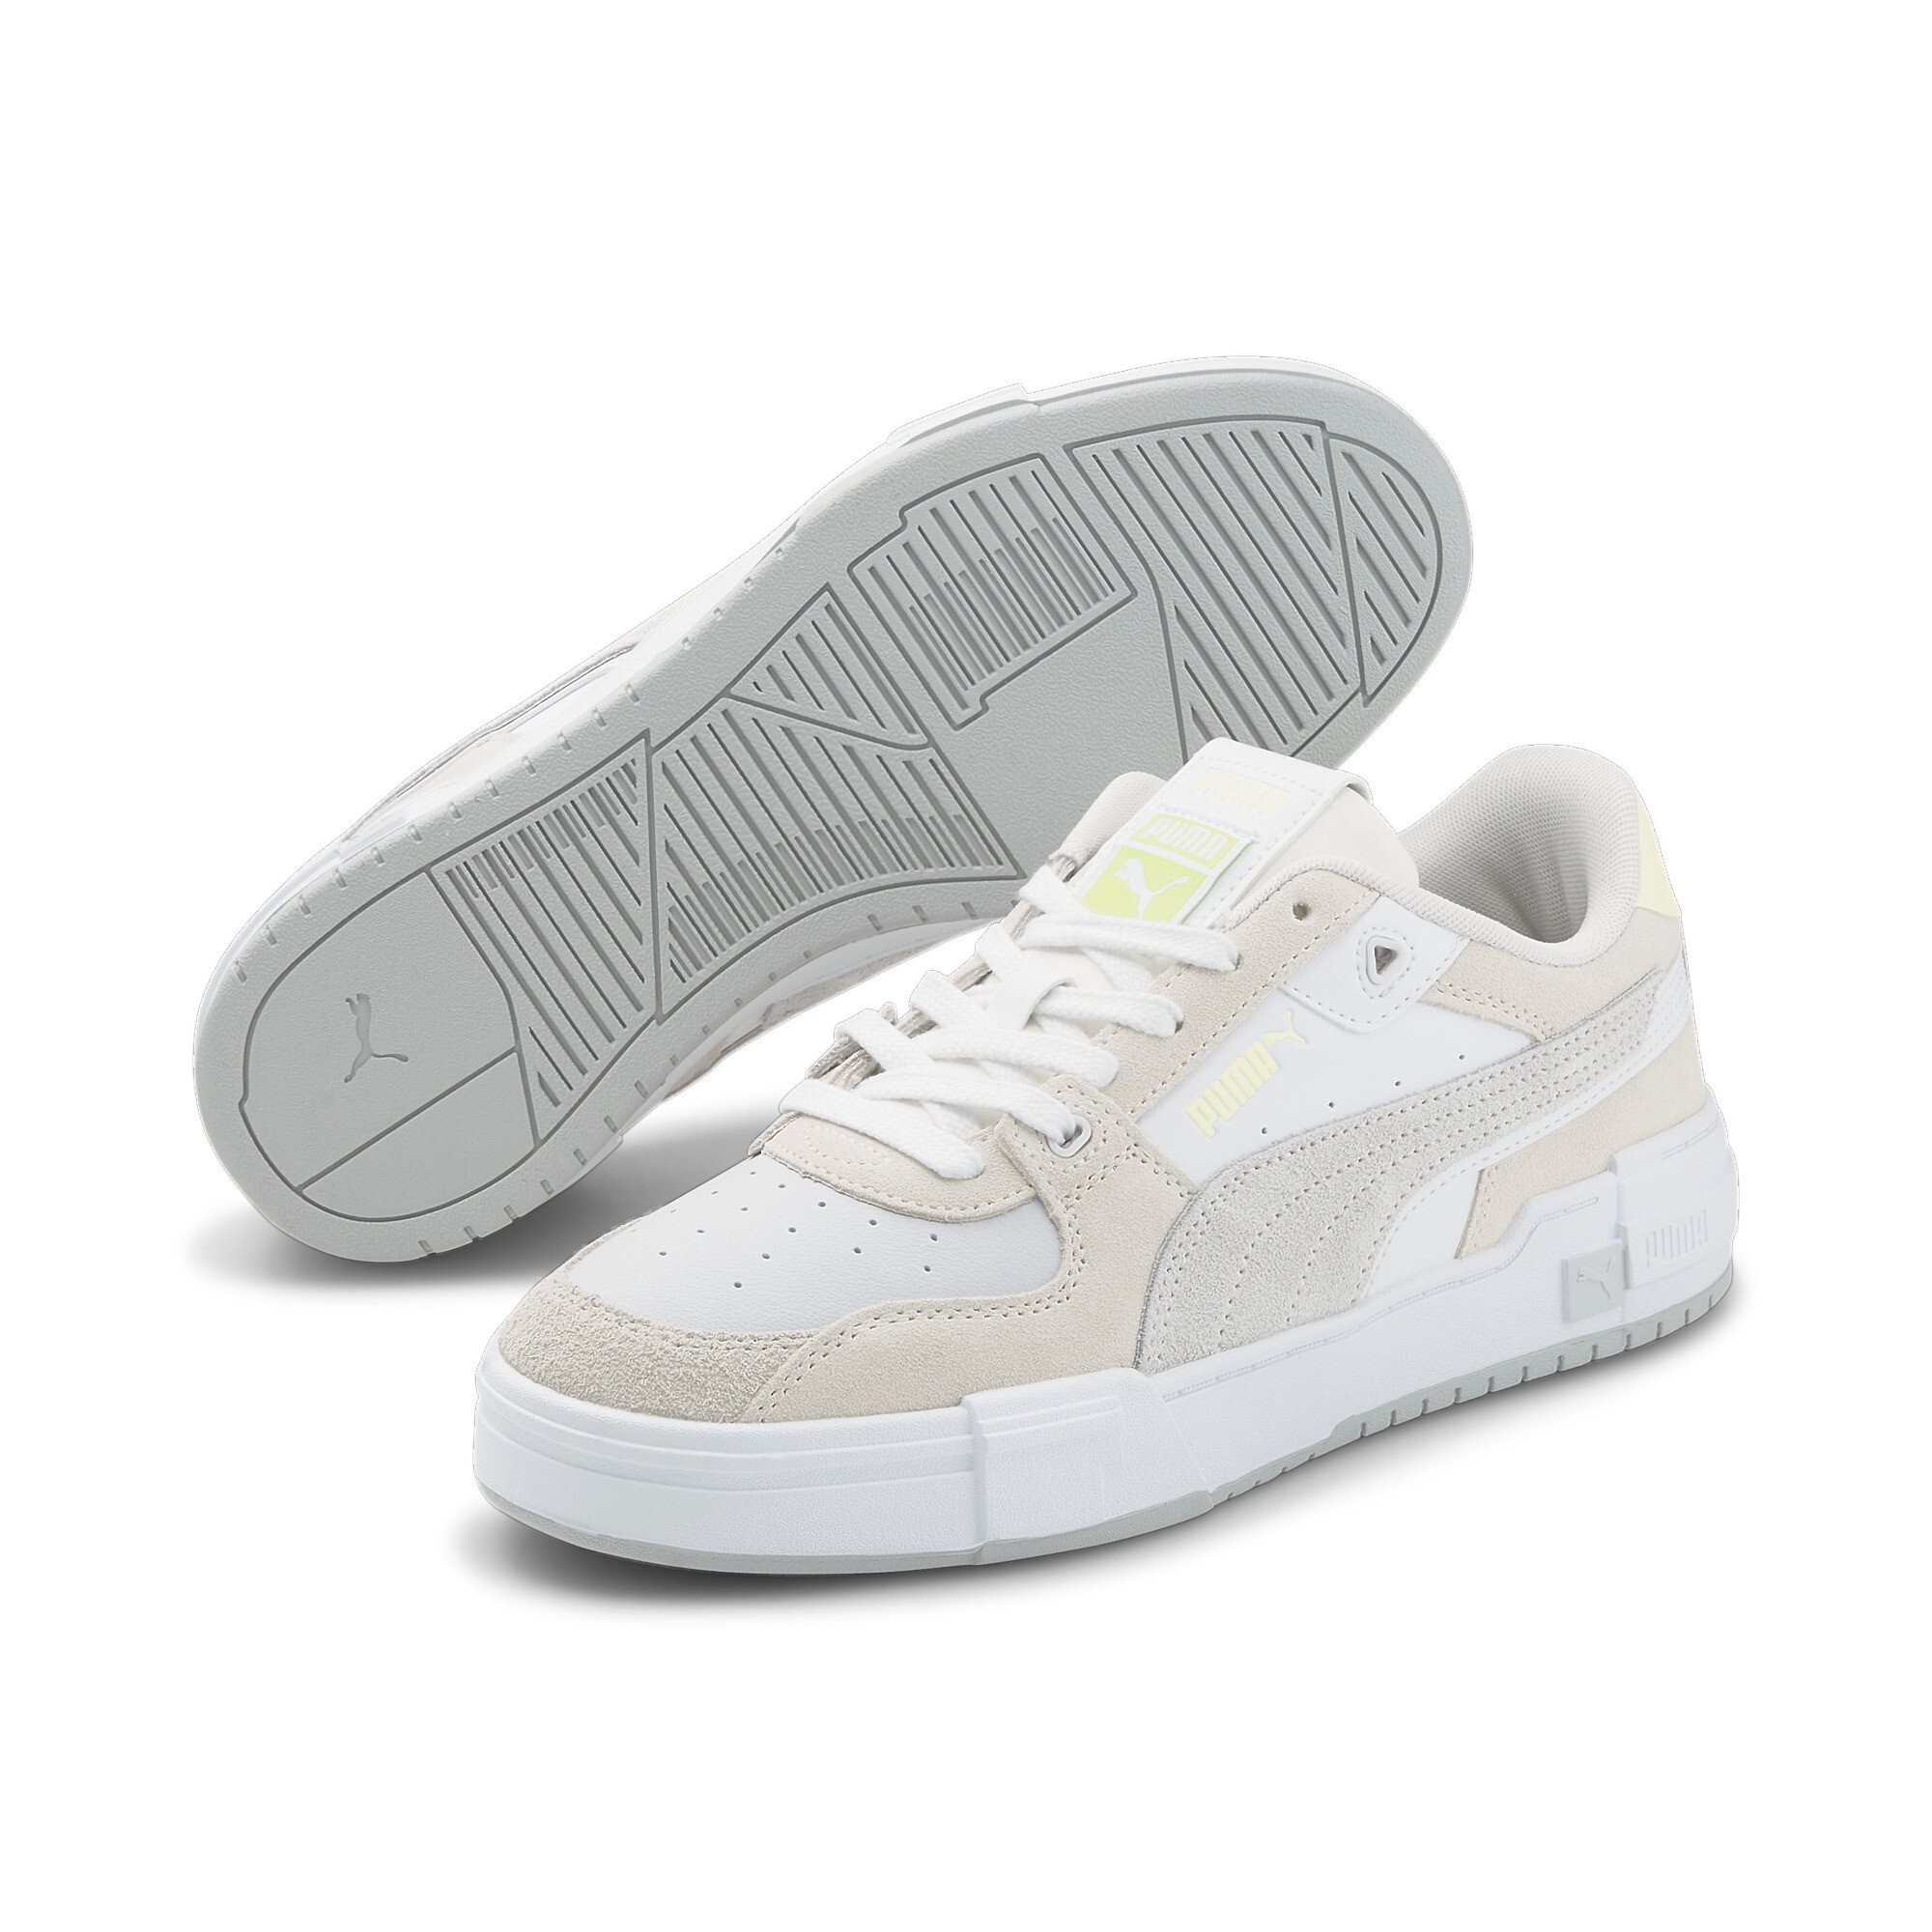 Men's Puma CA Pro Glitch Suede Sneakers, White, Size 44.5, Shoes